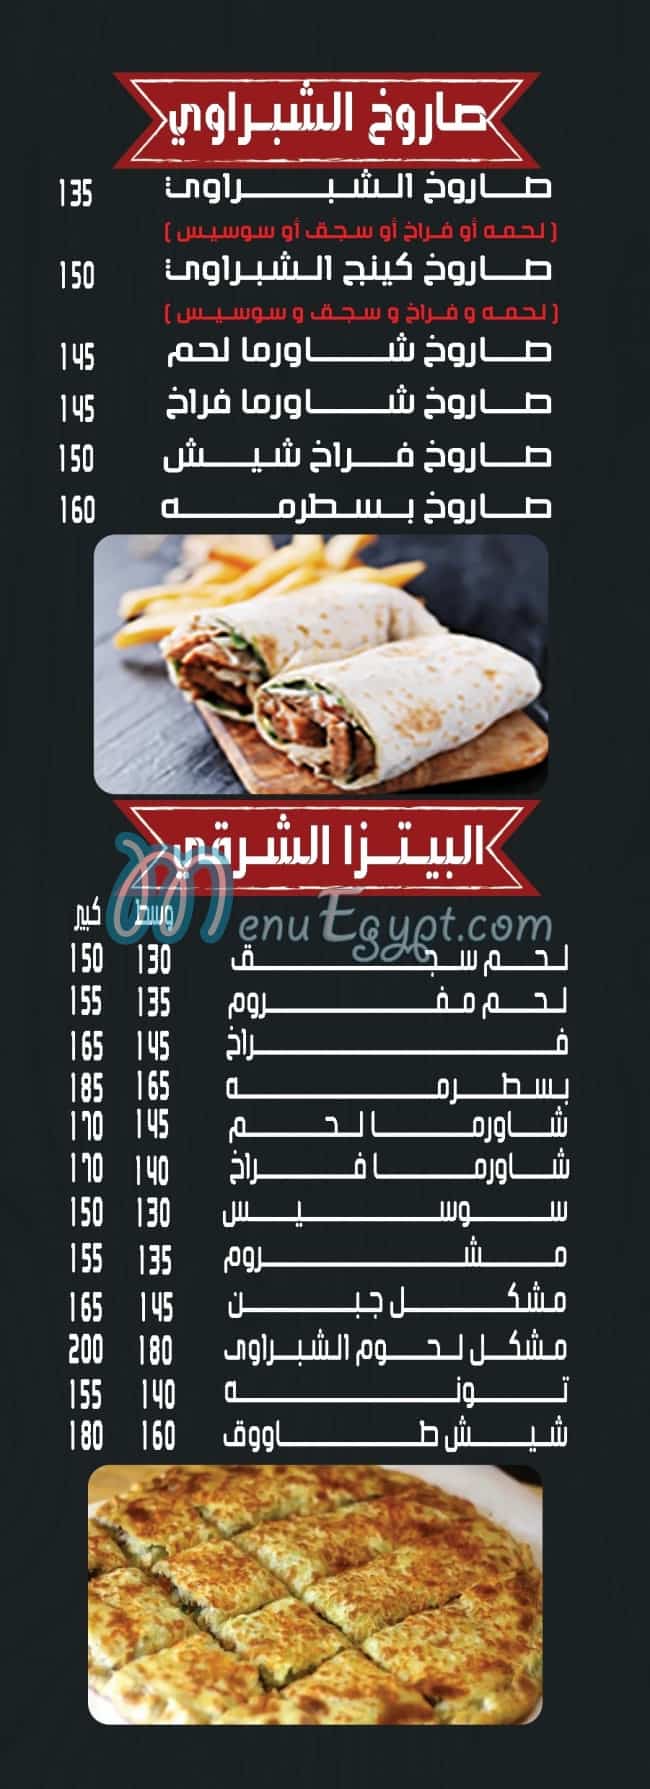 Elshabrawy Maadi menu Egypt 1